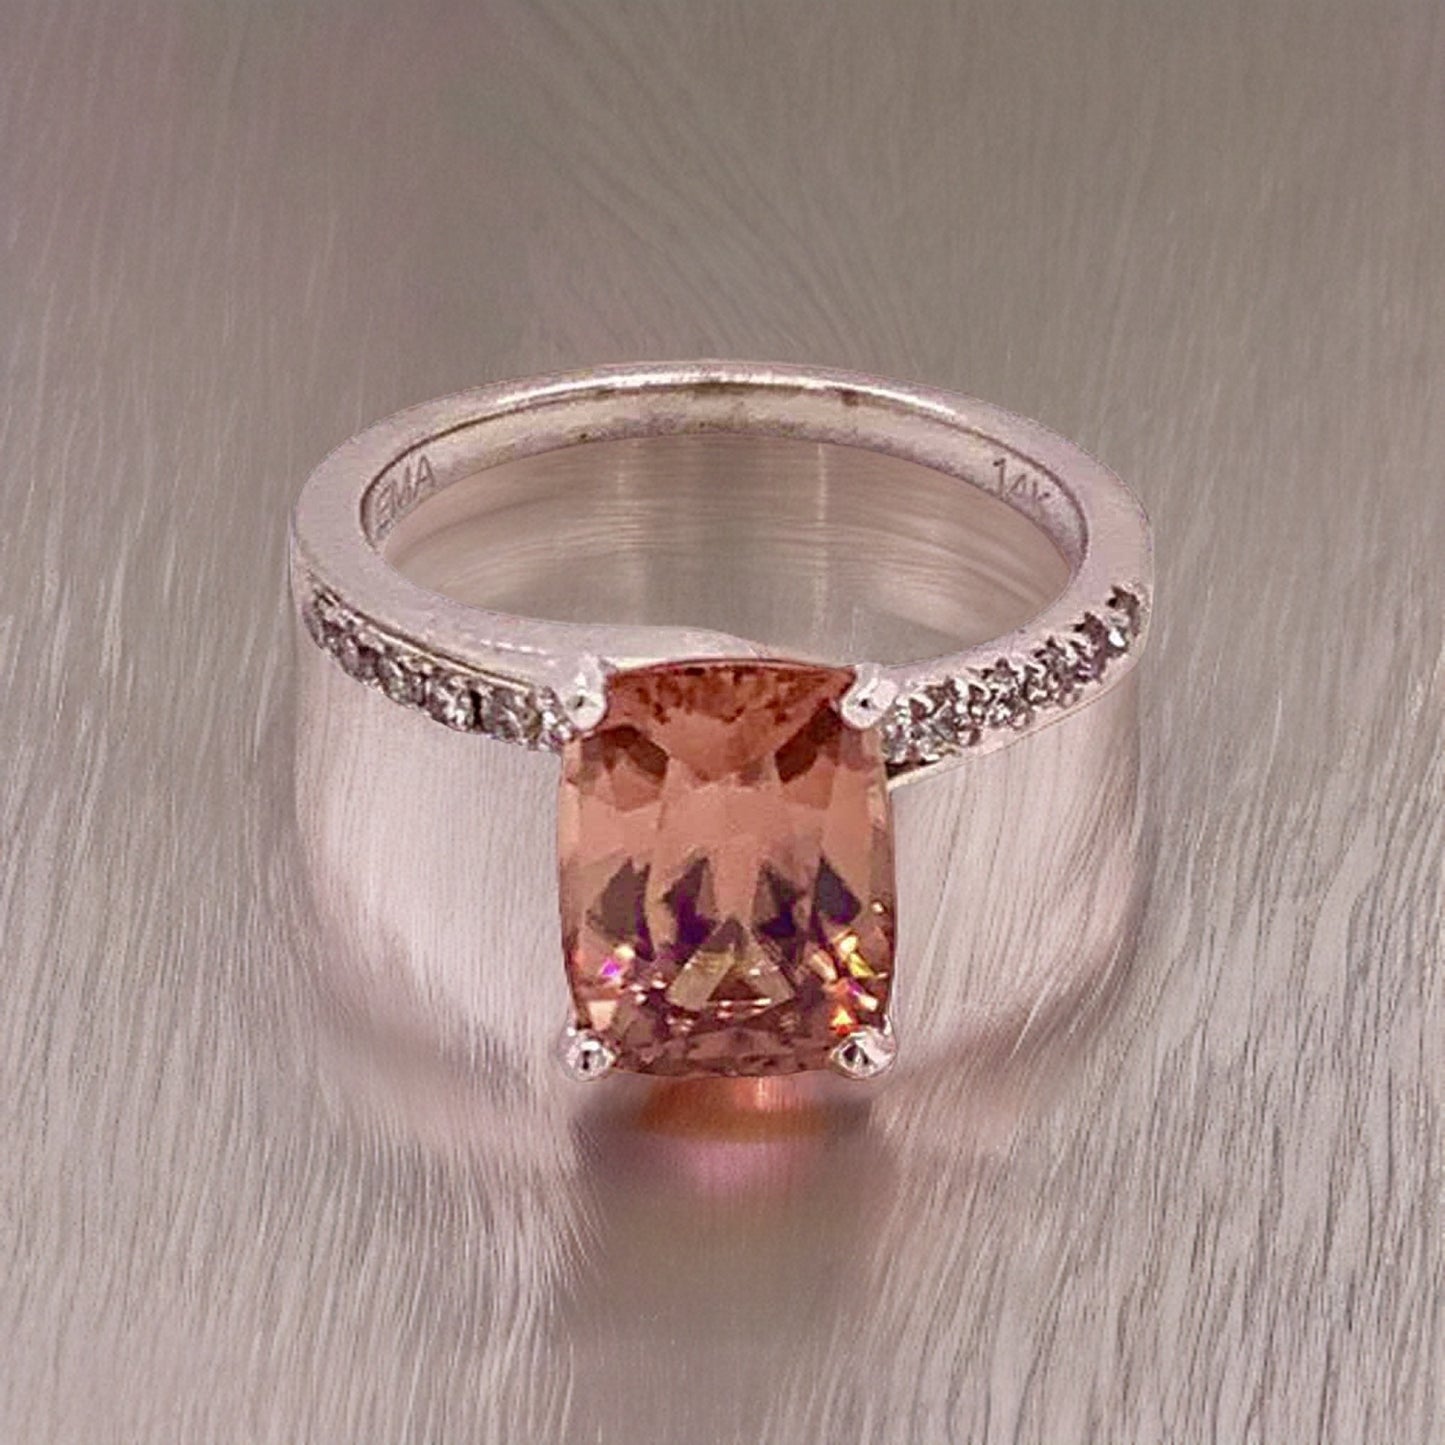 Diamond Zircon Ring 14k Gold Large 4.45 TCW Women Certified $3,100 912276